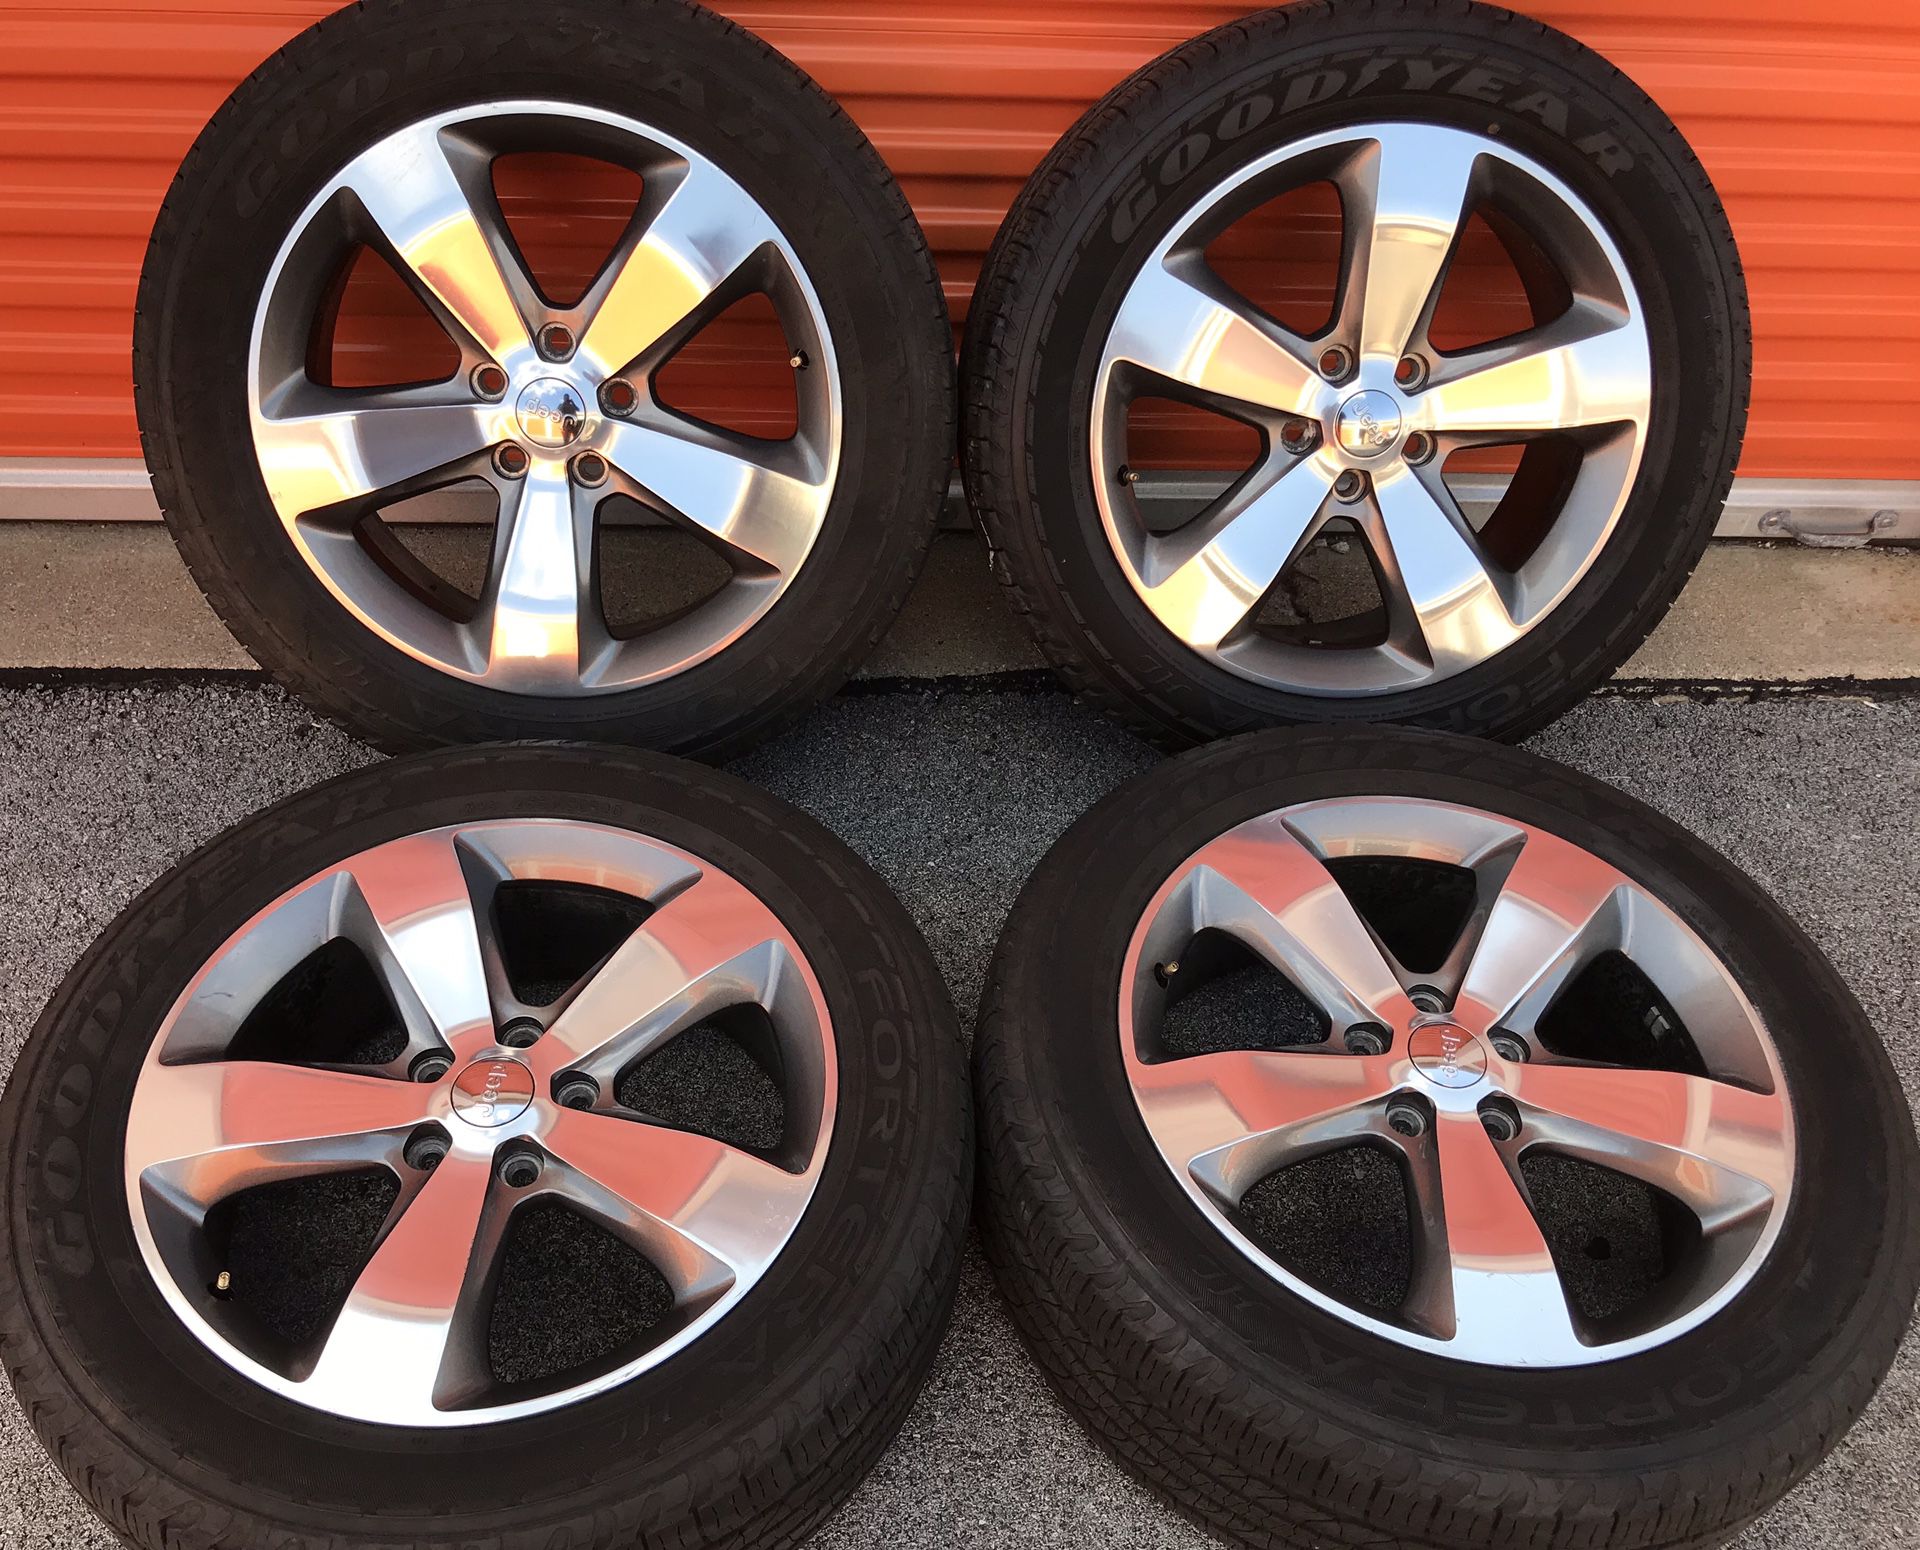 Like New 20” Jeep Grand Cherokee 20 inch Sport Durango OEM Factory Wheels Rims Tires